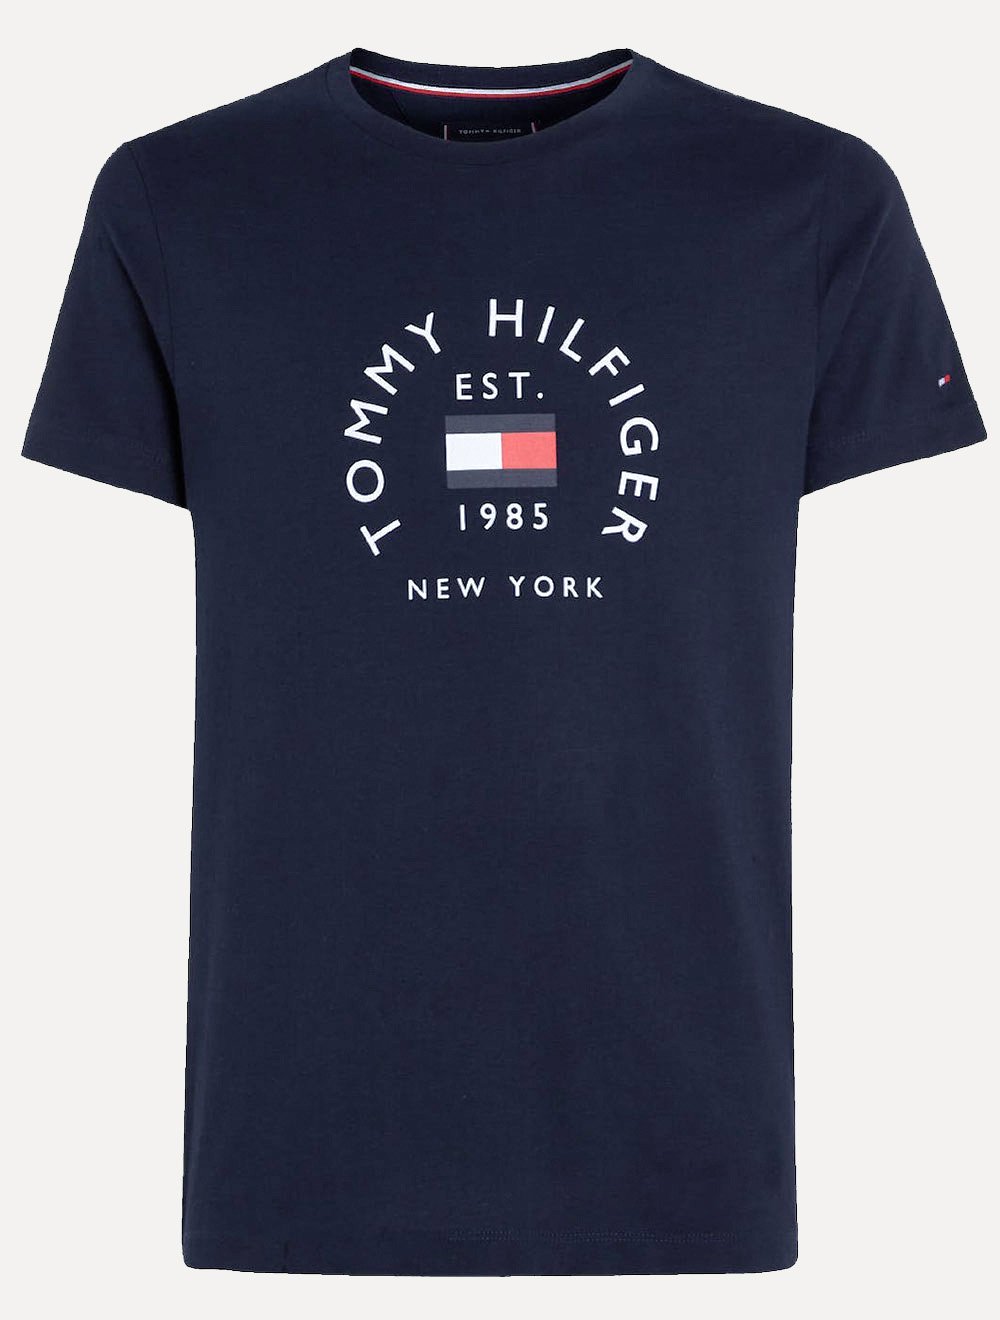 Camiseta Tommy Hilfiger Masculina Arch Logo Est.1985 Azul Marinho